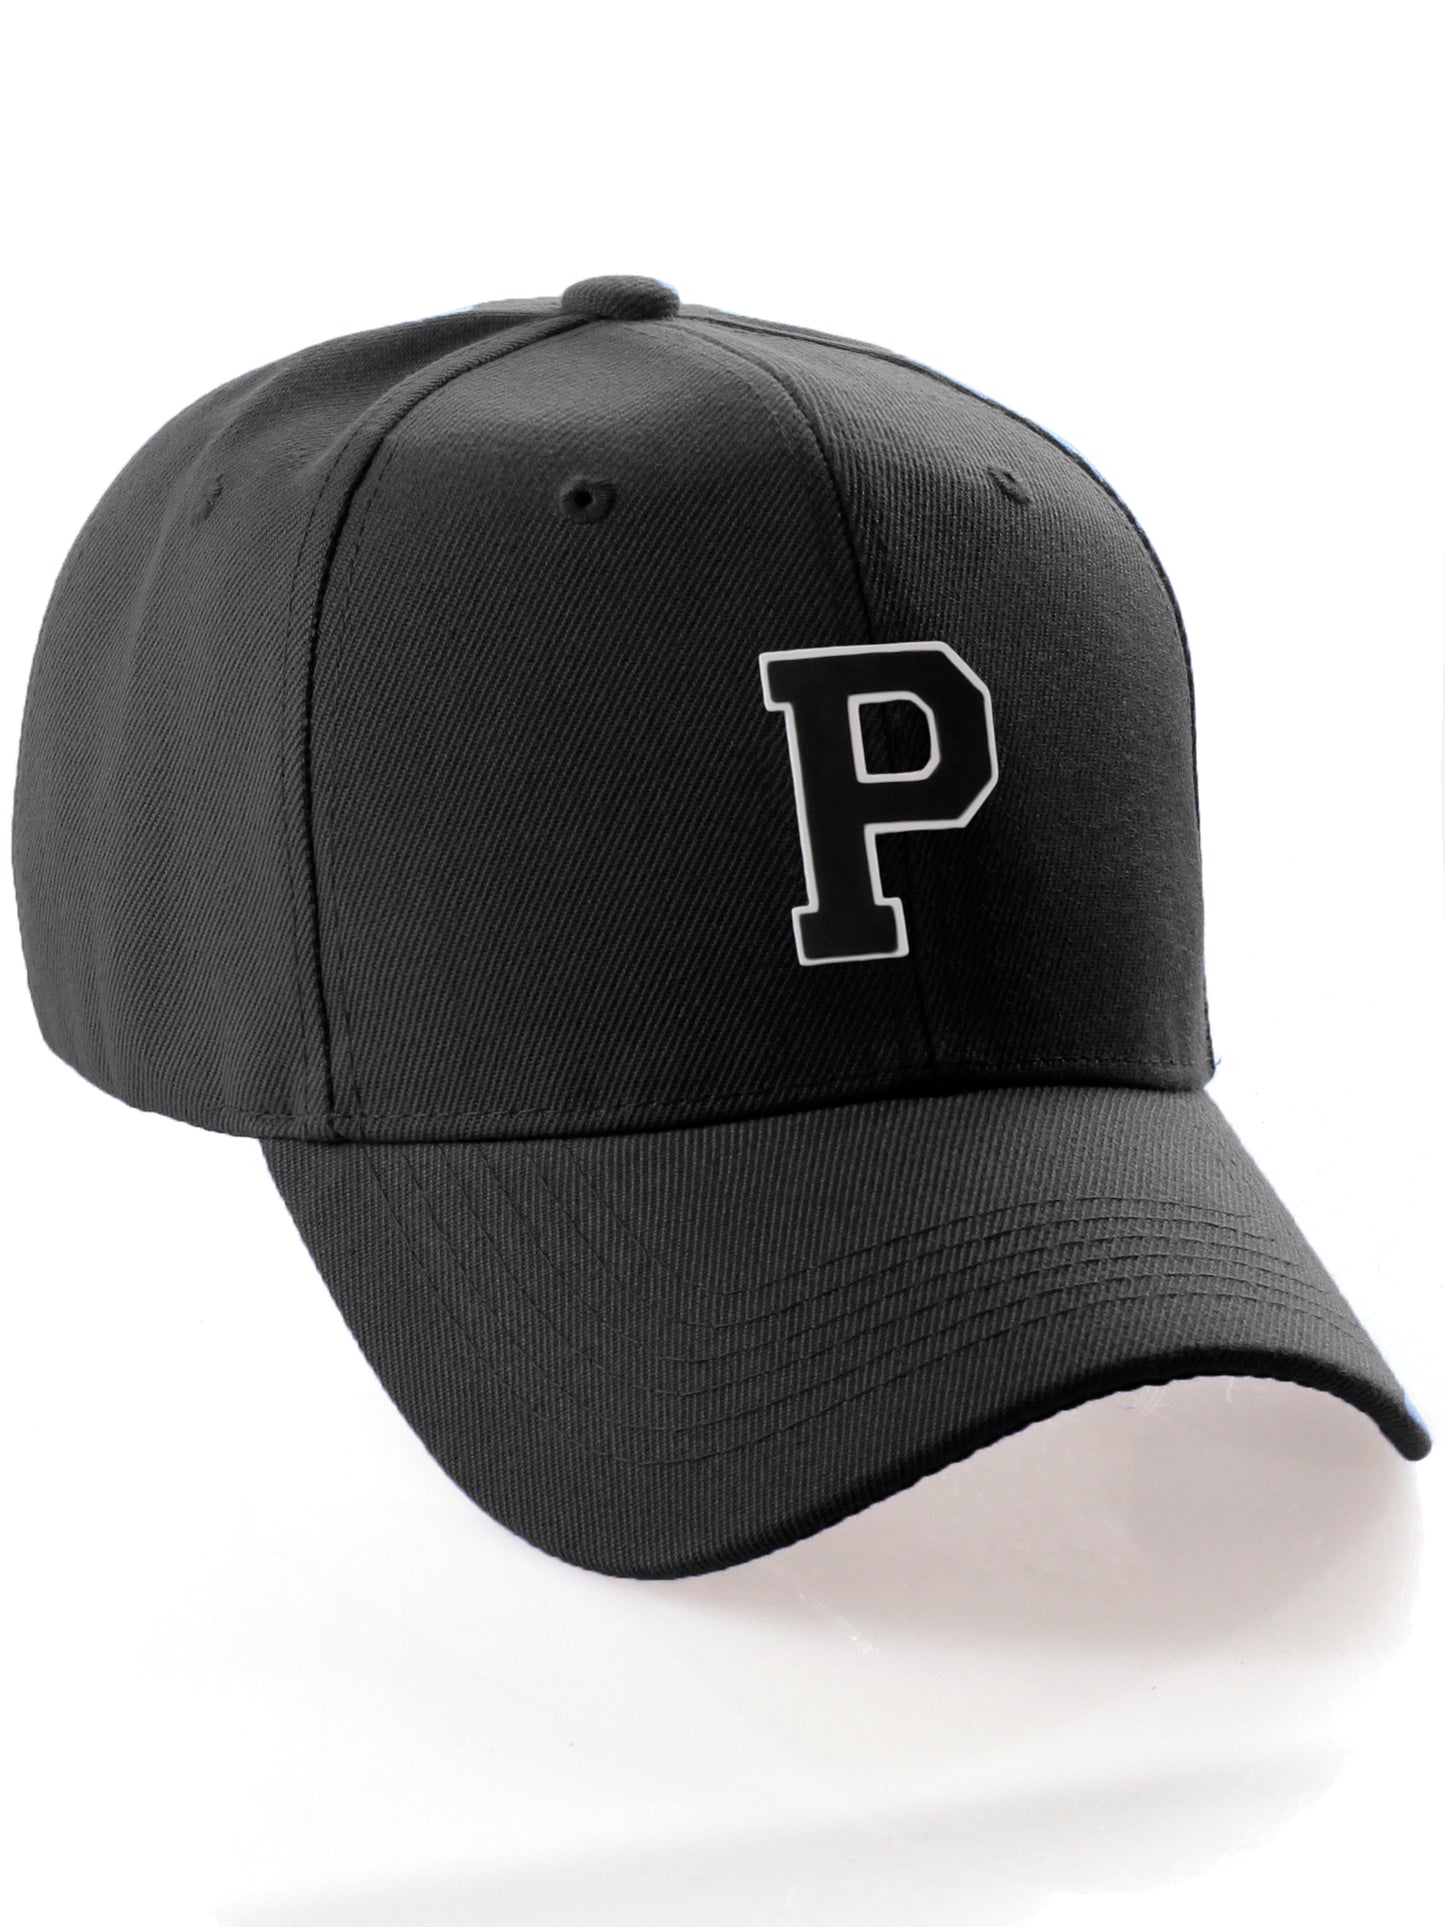 Classic Baseball hat Custom A to Z Initial Team Letter, Black Cap White Black